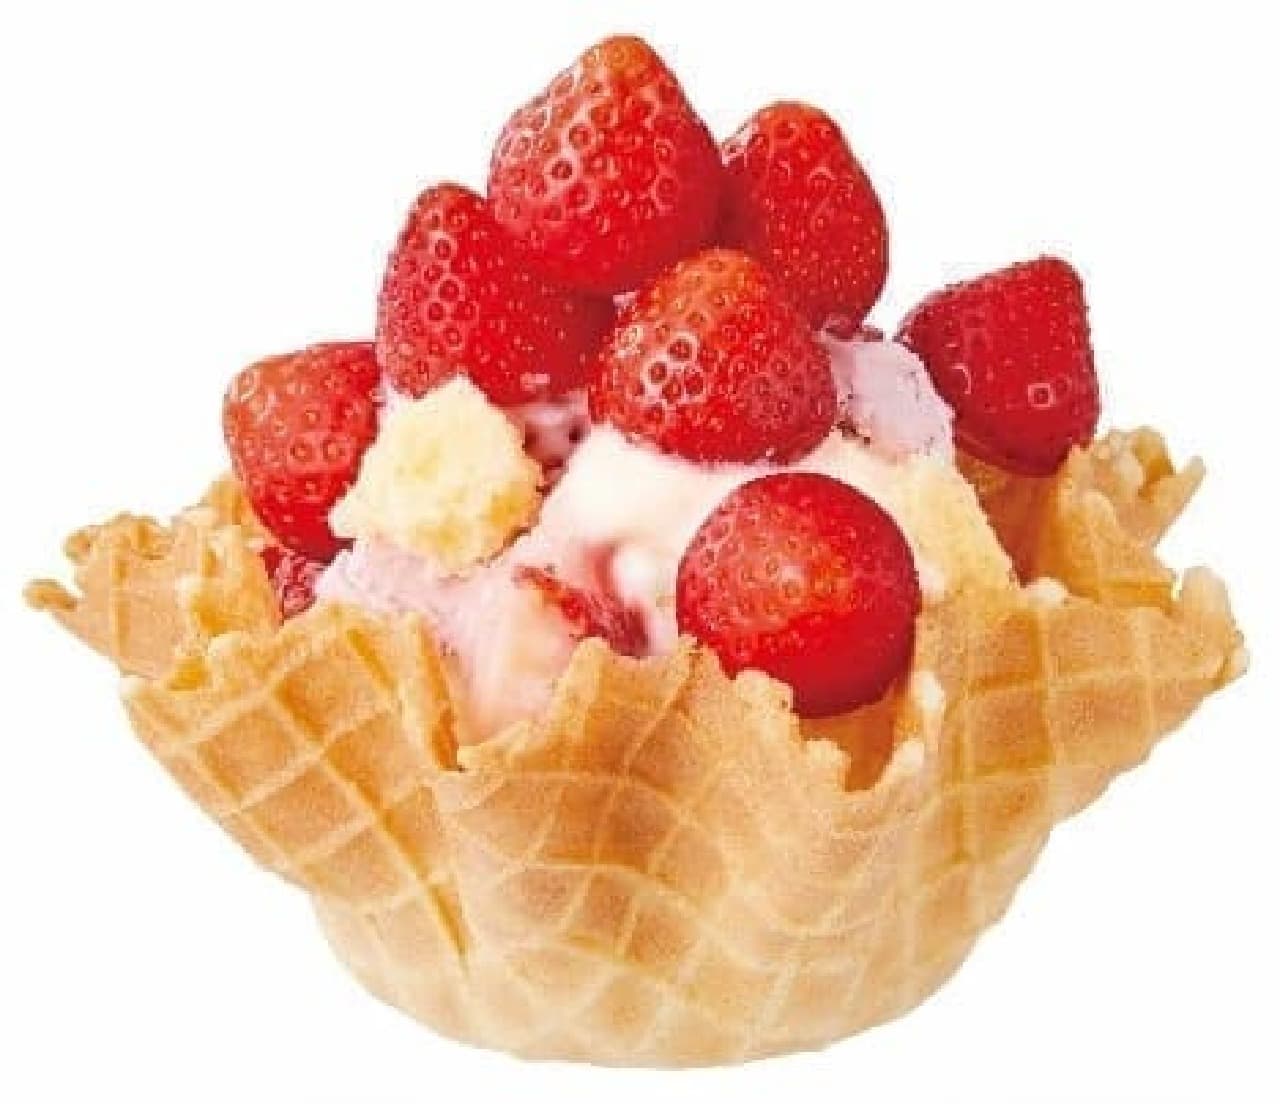 Cold Stone Creamery "Summer Strawberries! Shortcake"